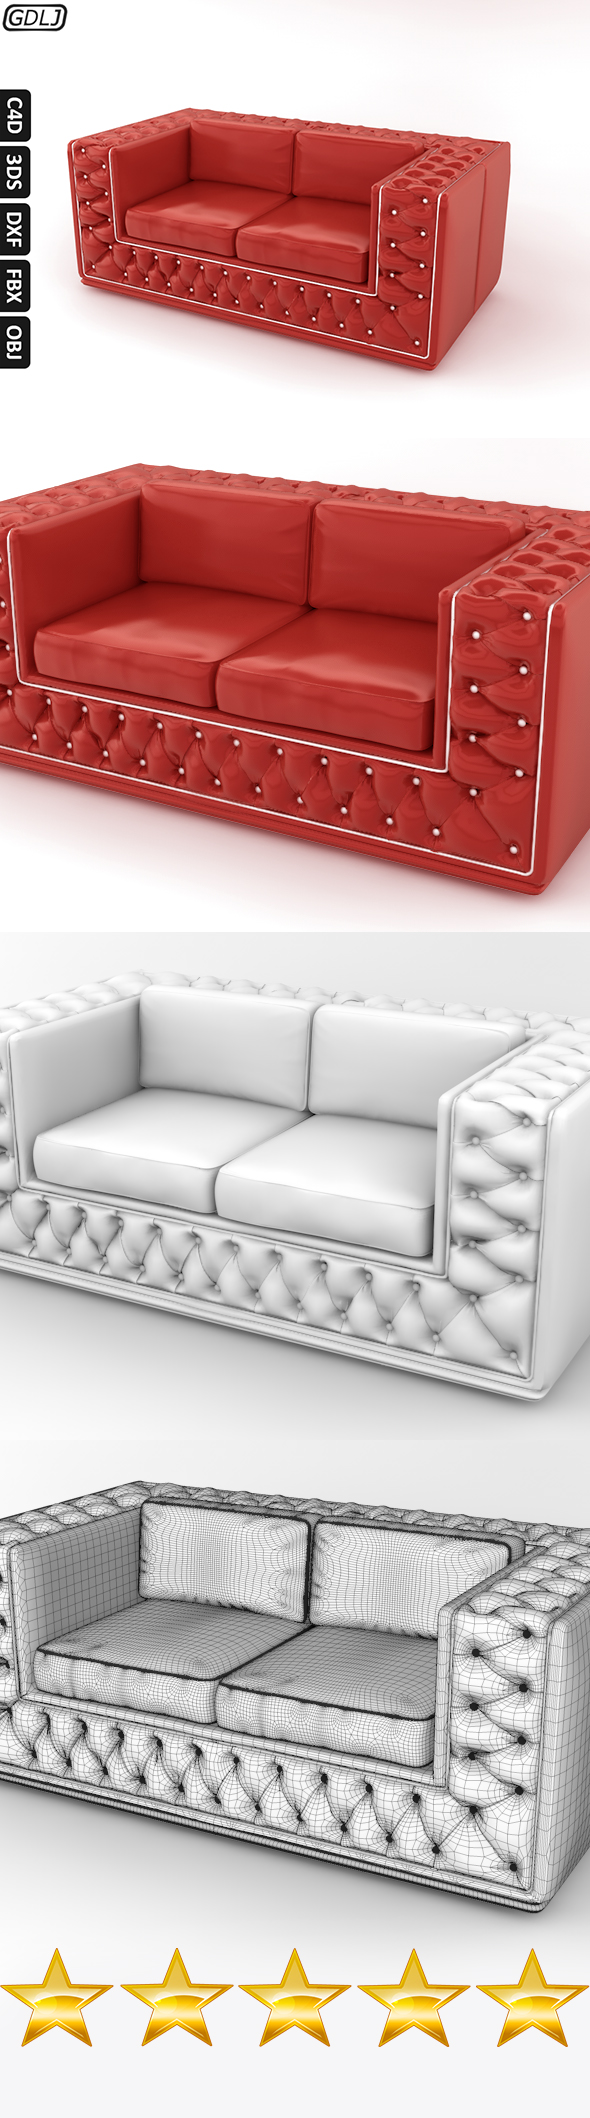 Fashionable leather sofa - 3Docean 23271742